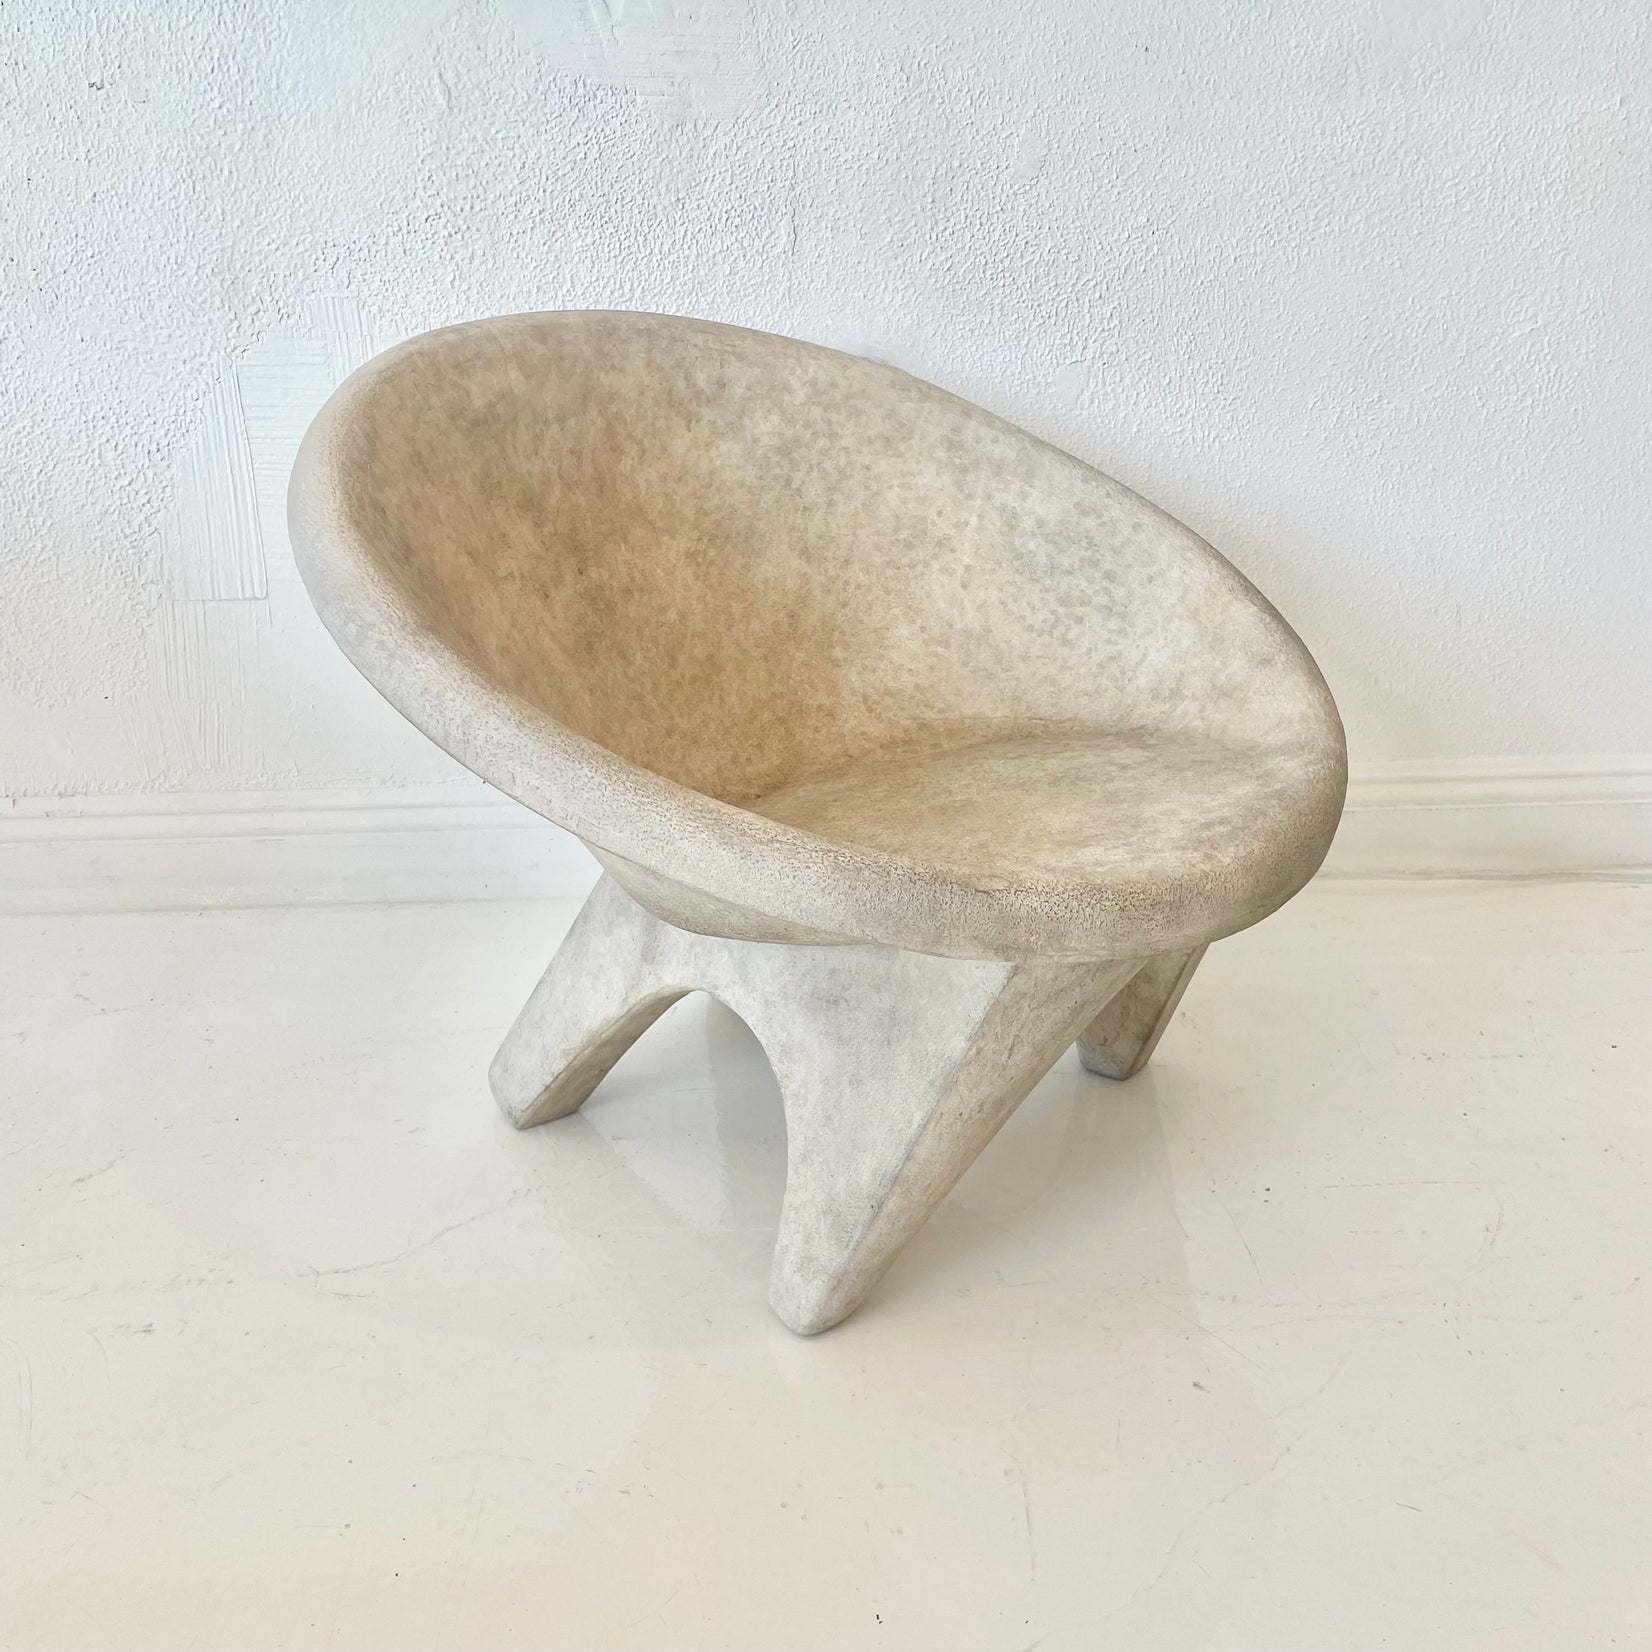 Sculptural Concrete Chair